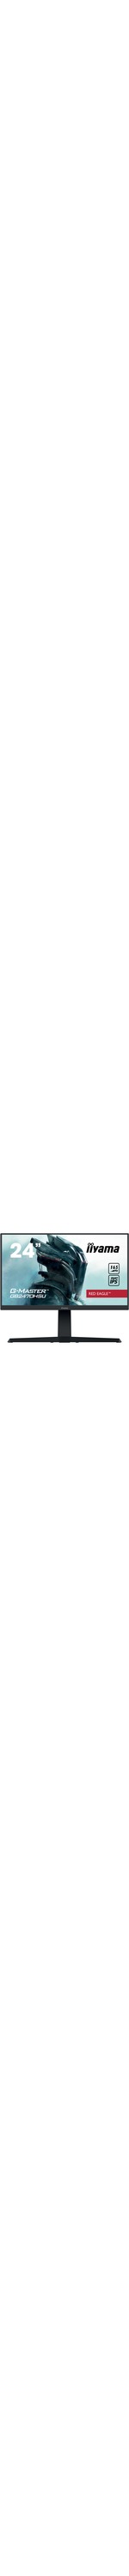 iiyama Red Eagle G-Master GB2470HSU-B1 23.8And#34; Full HD 165Hz LED LCD Monitor - 16:9 - Matte Black